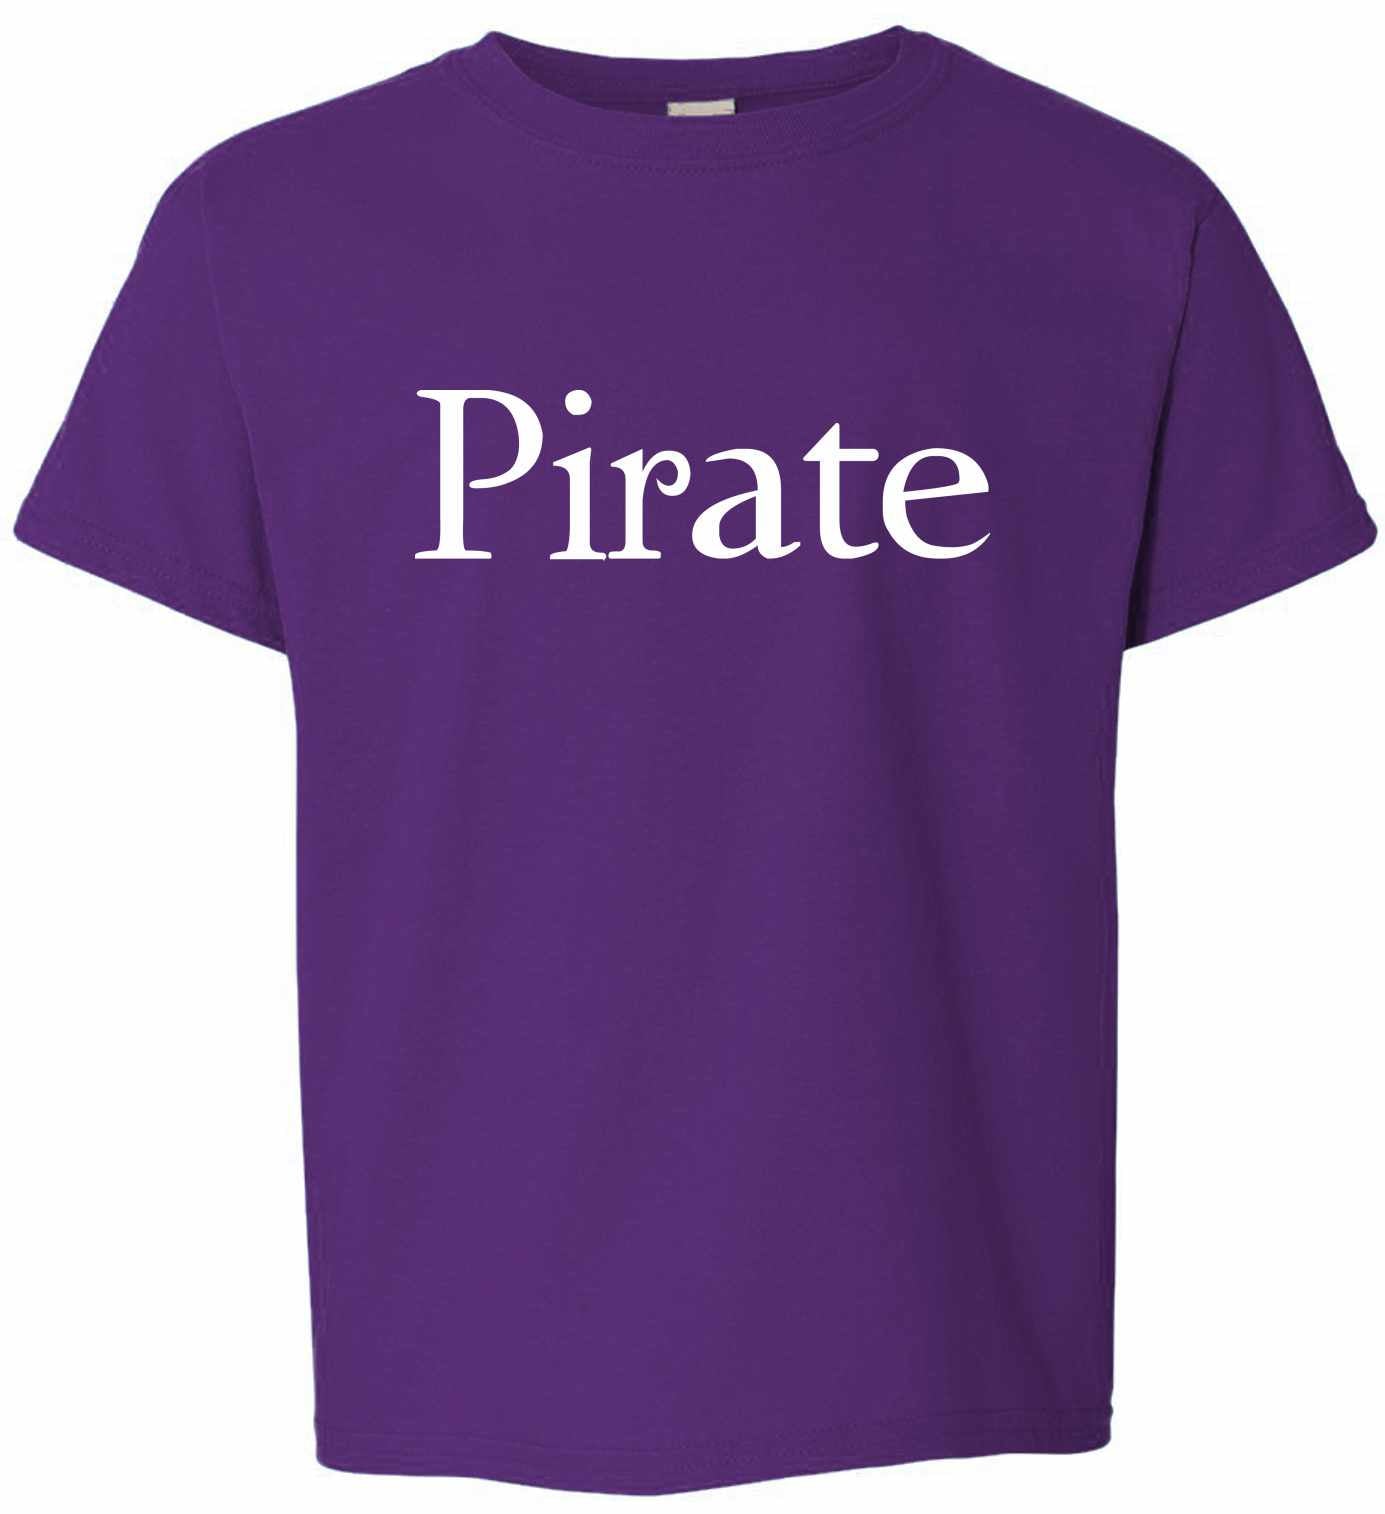 Pirate on Kids T-Shirt